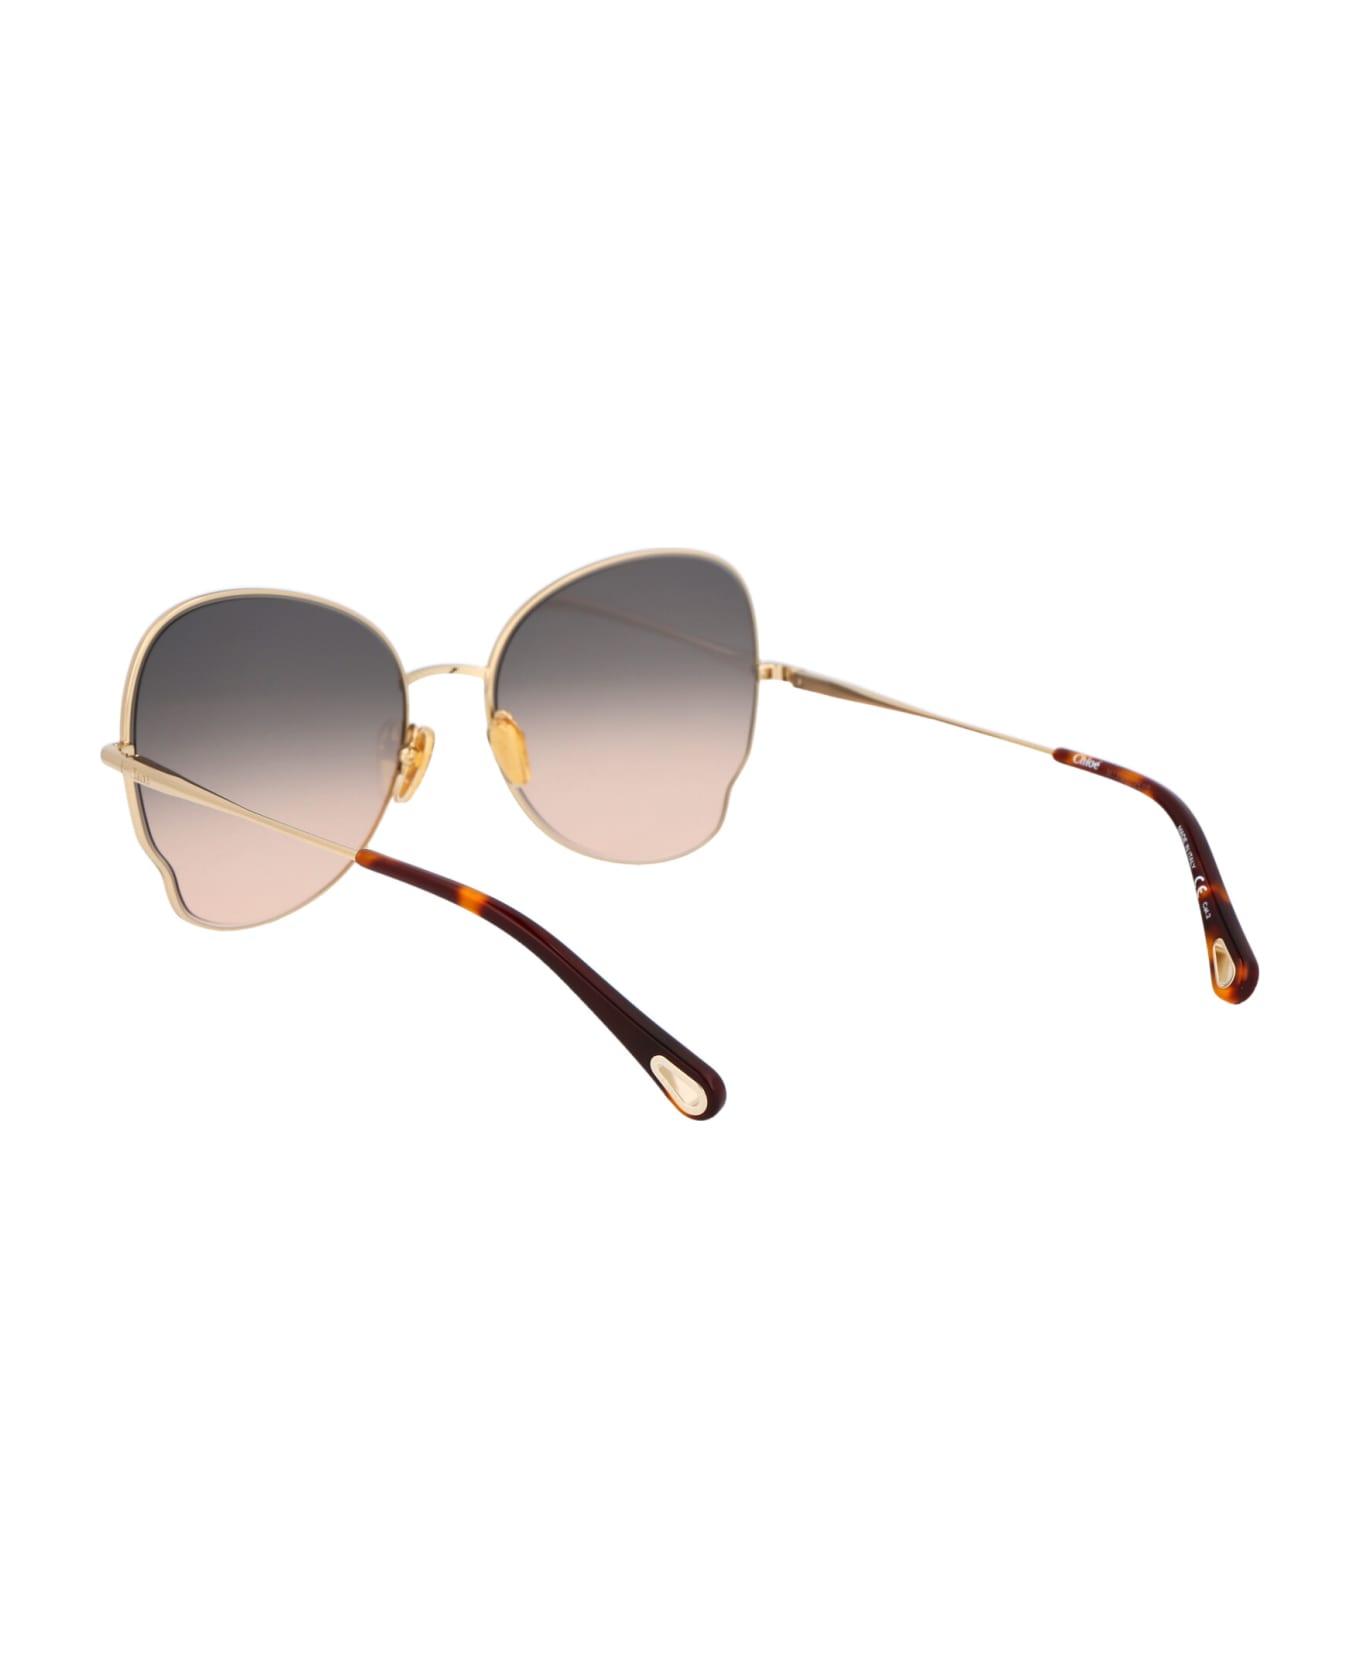 Chloé Eyewear Ch0094s Sunglasses - 001 GOLD GOLD BROWN サングラス